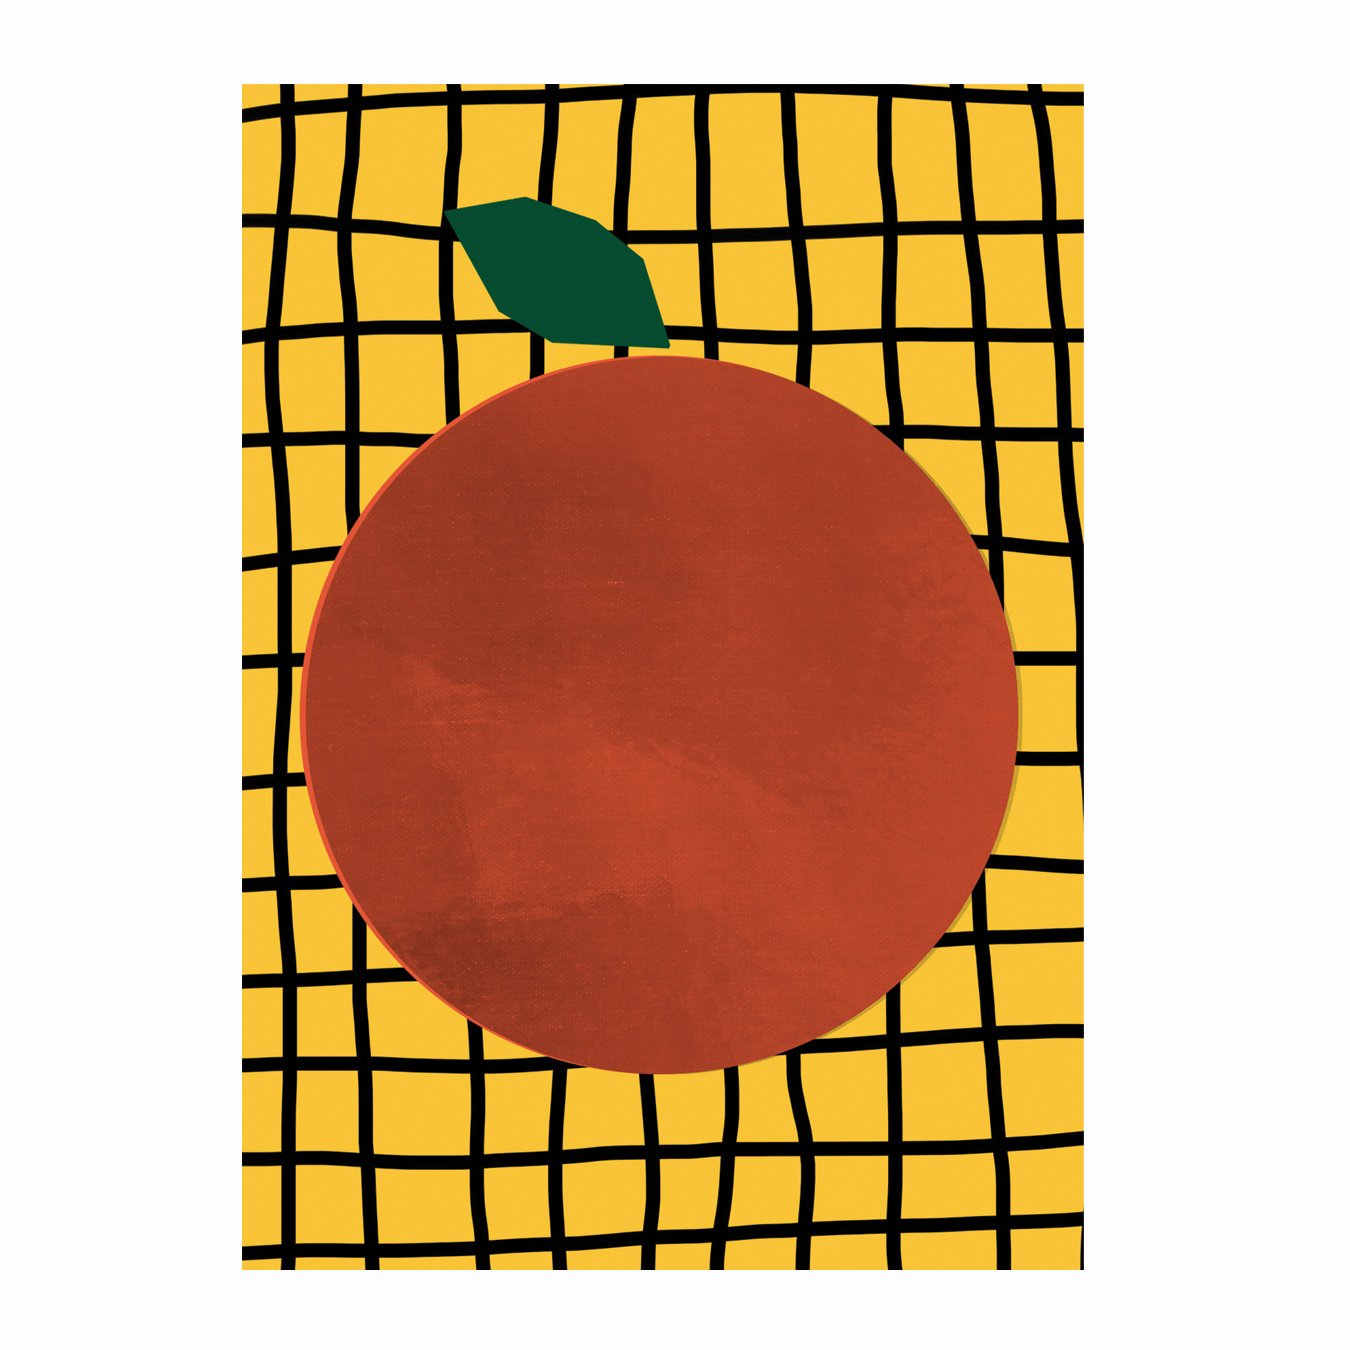 Orange Card